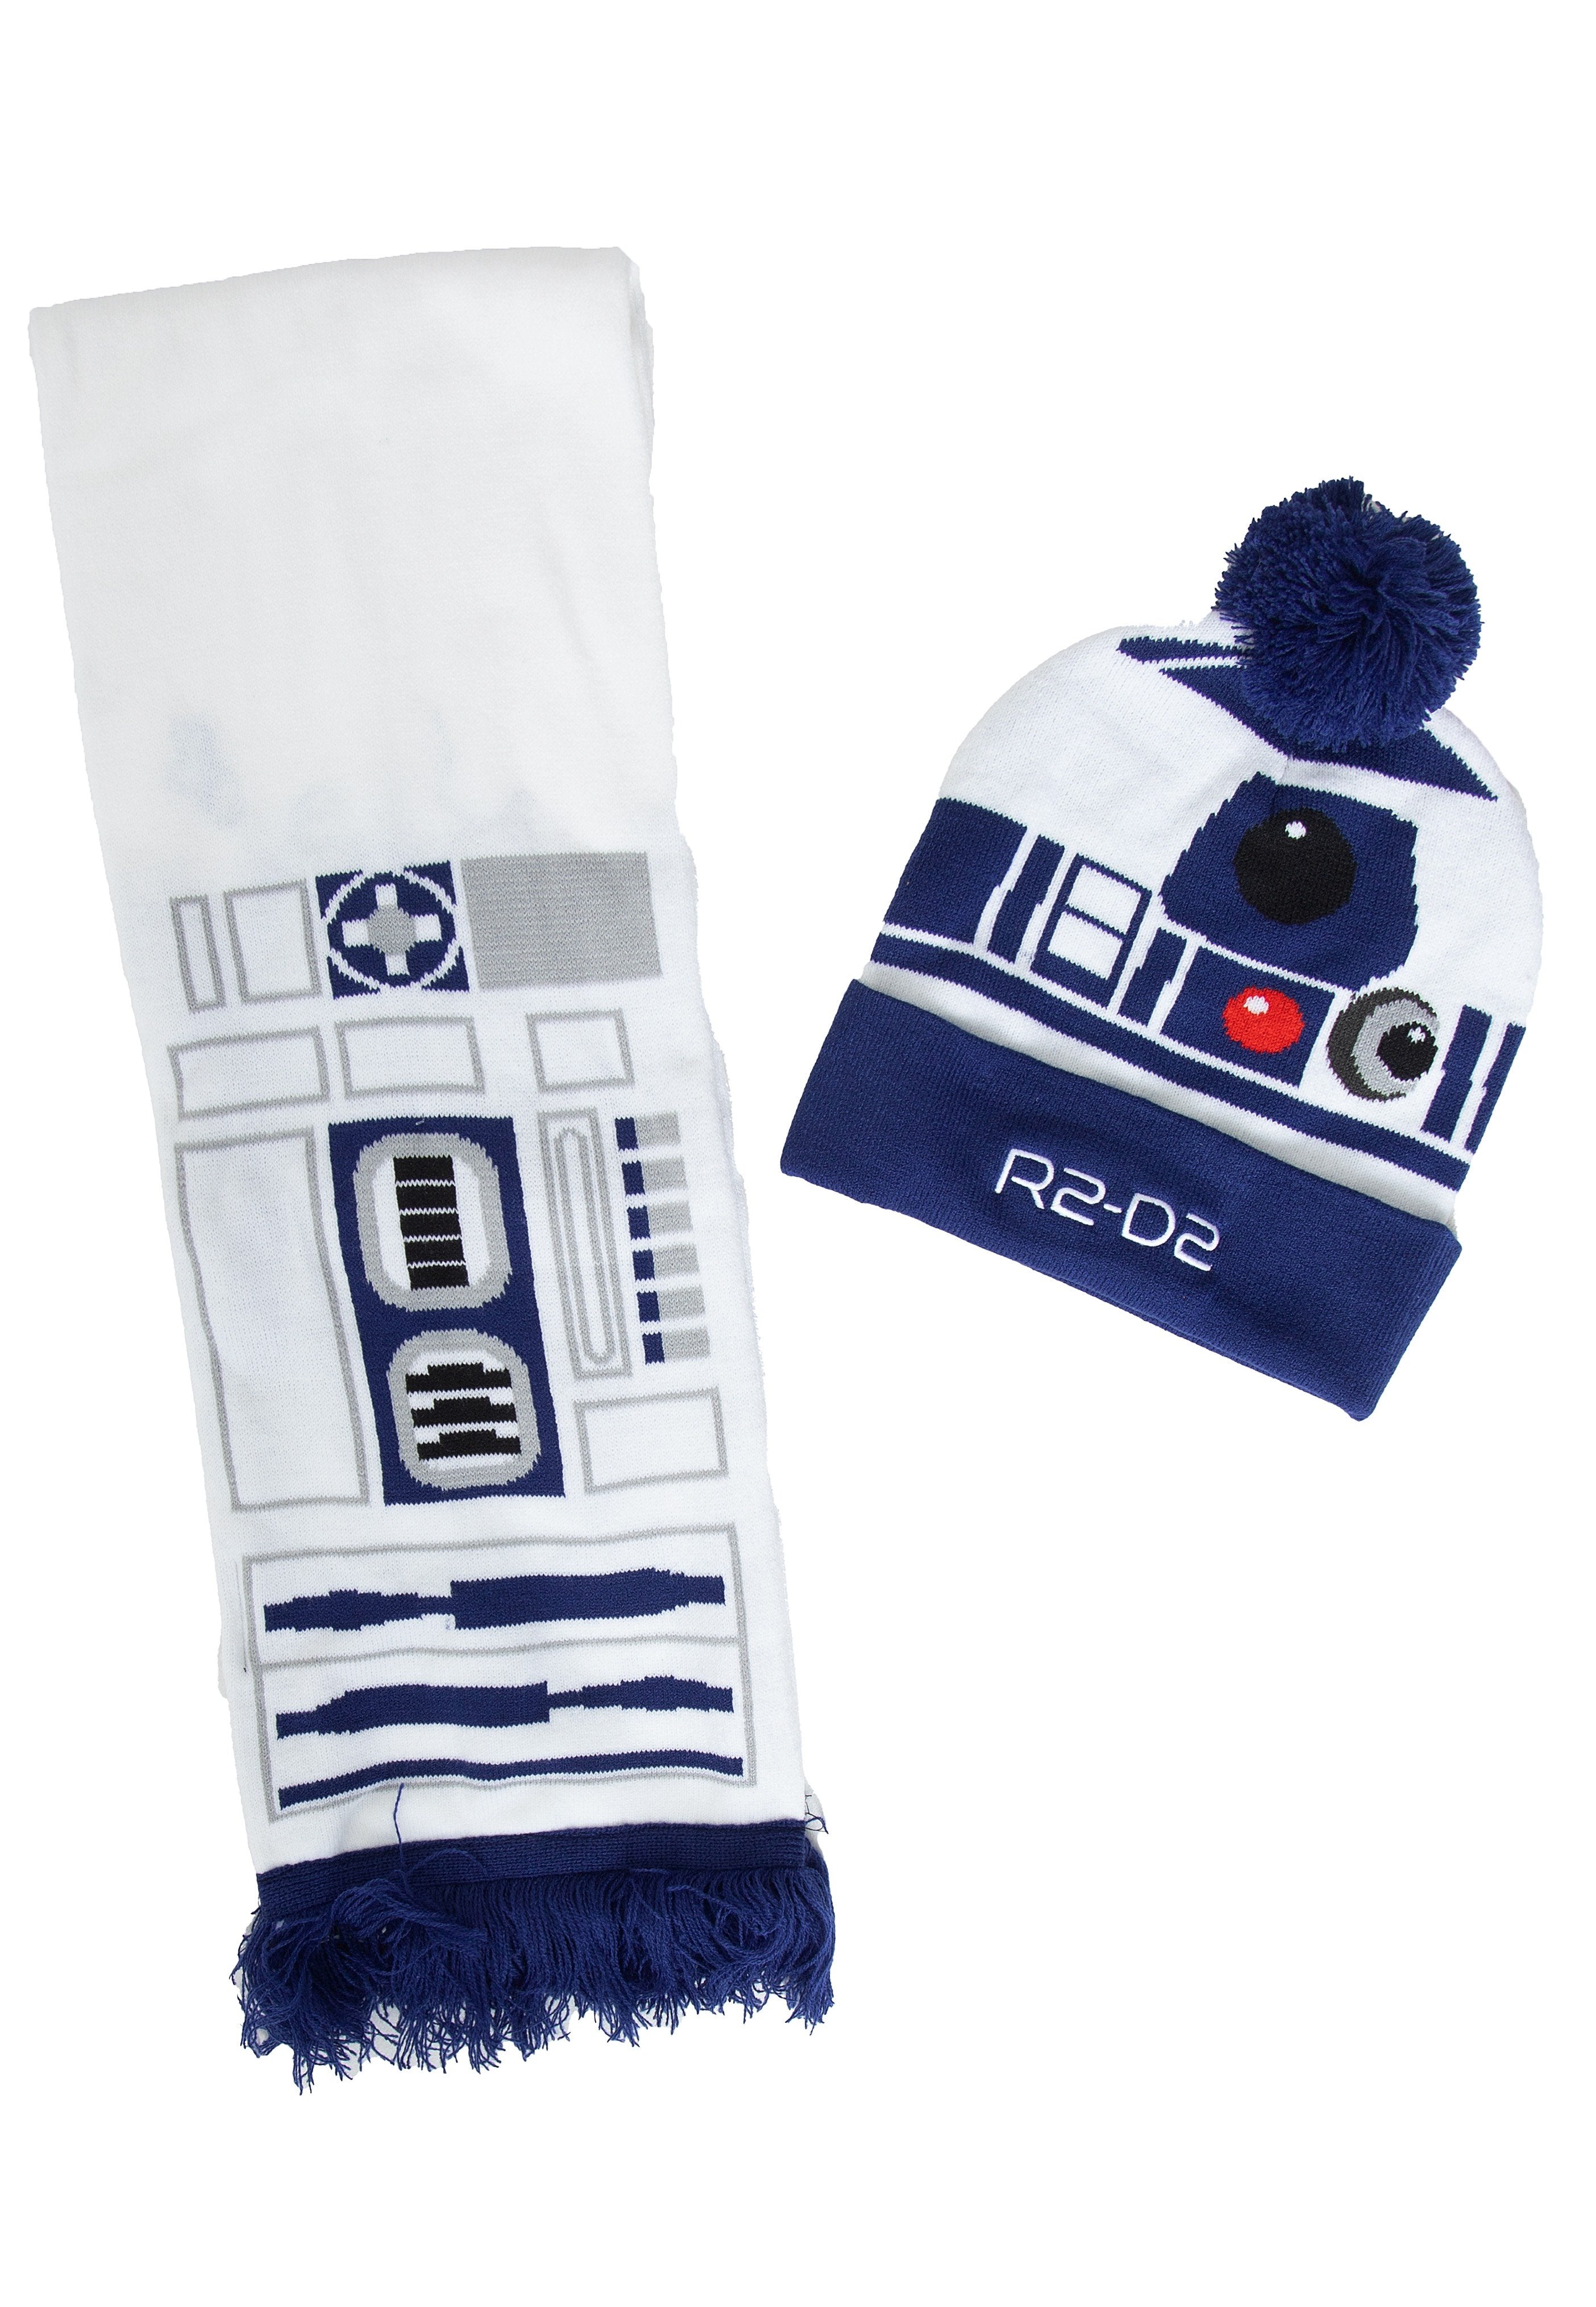 Star Wars - R2-D2 - Gift Set